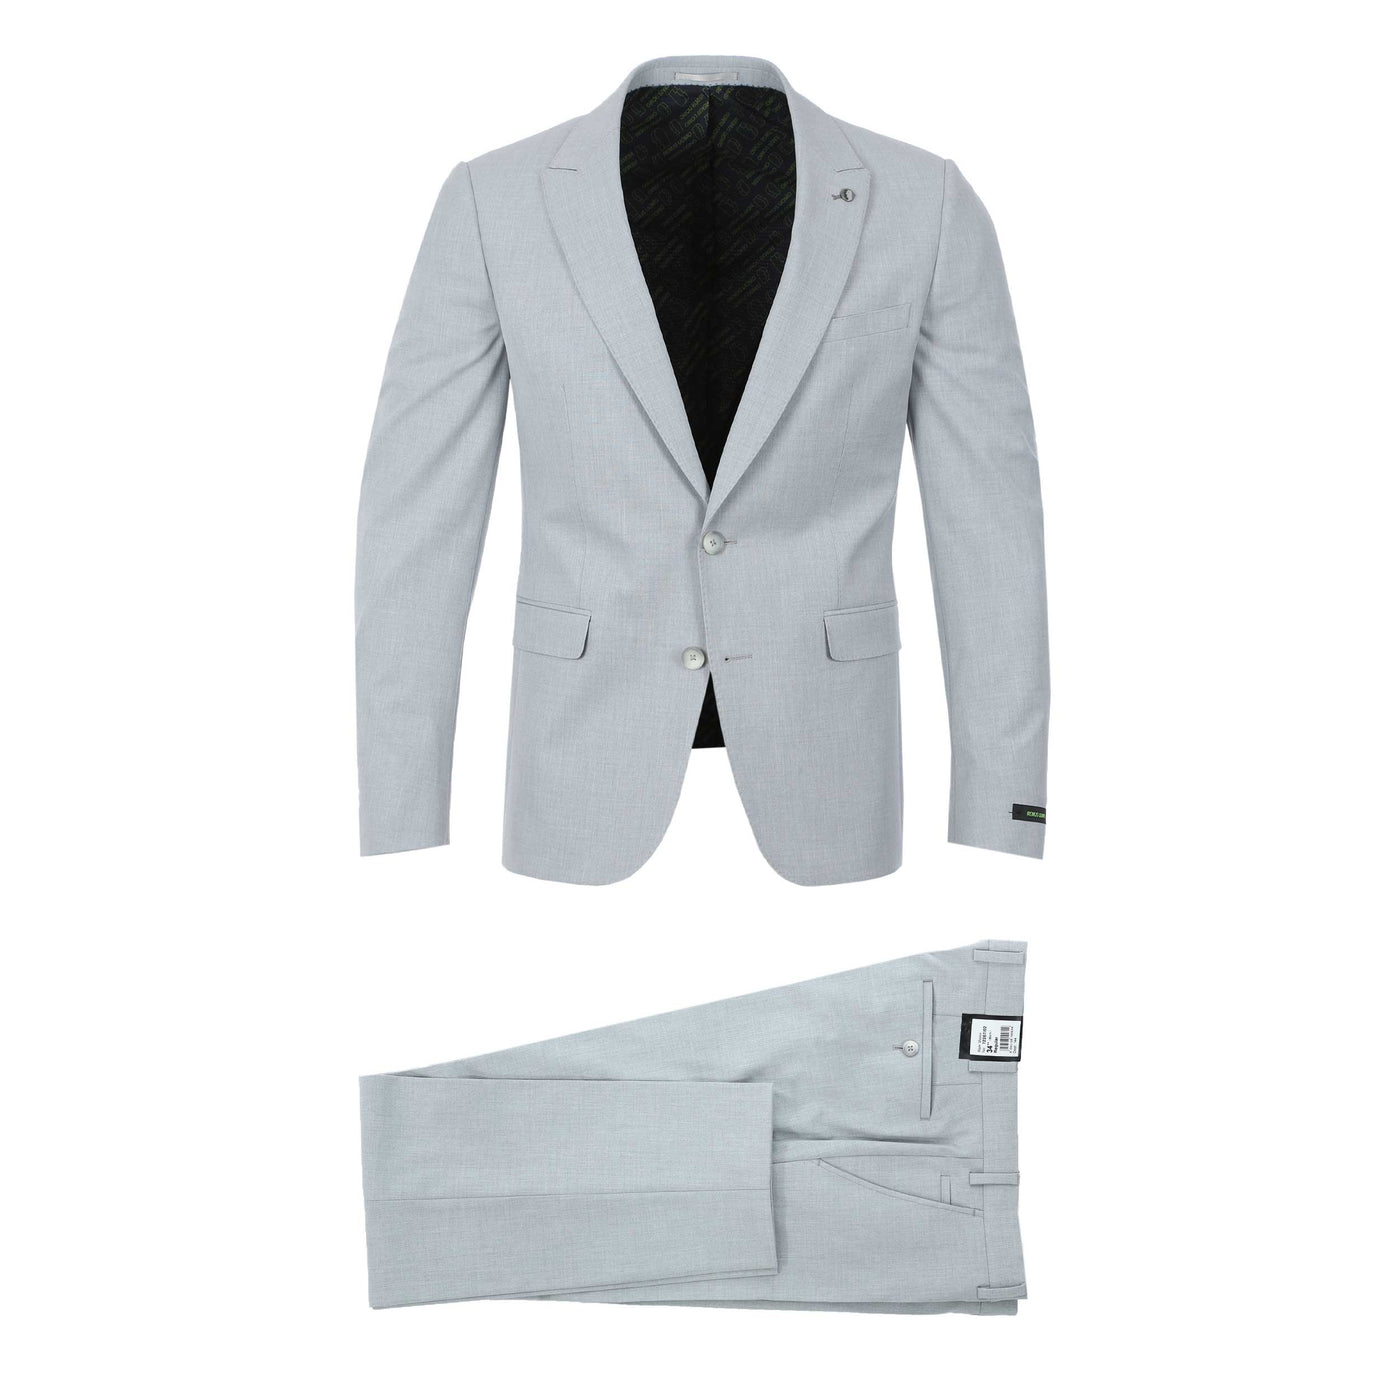 Remus Uomo Massa Jacket in Grey Suit